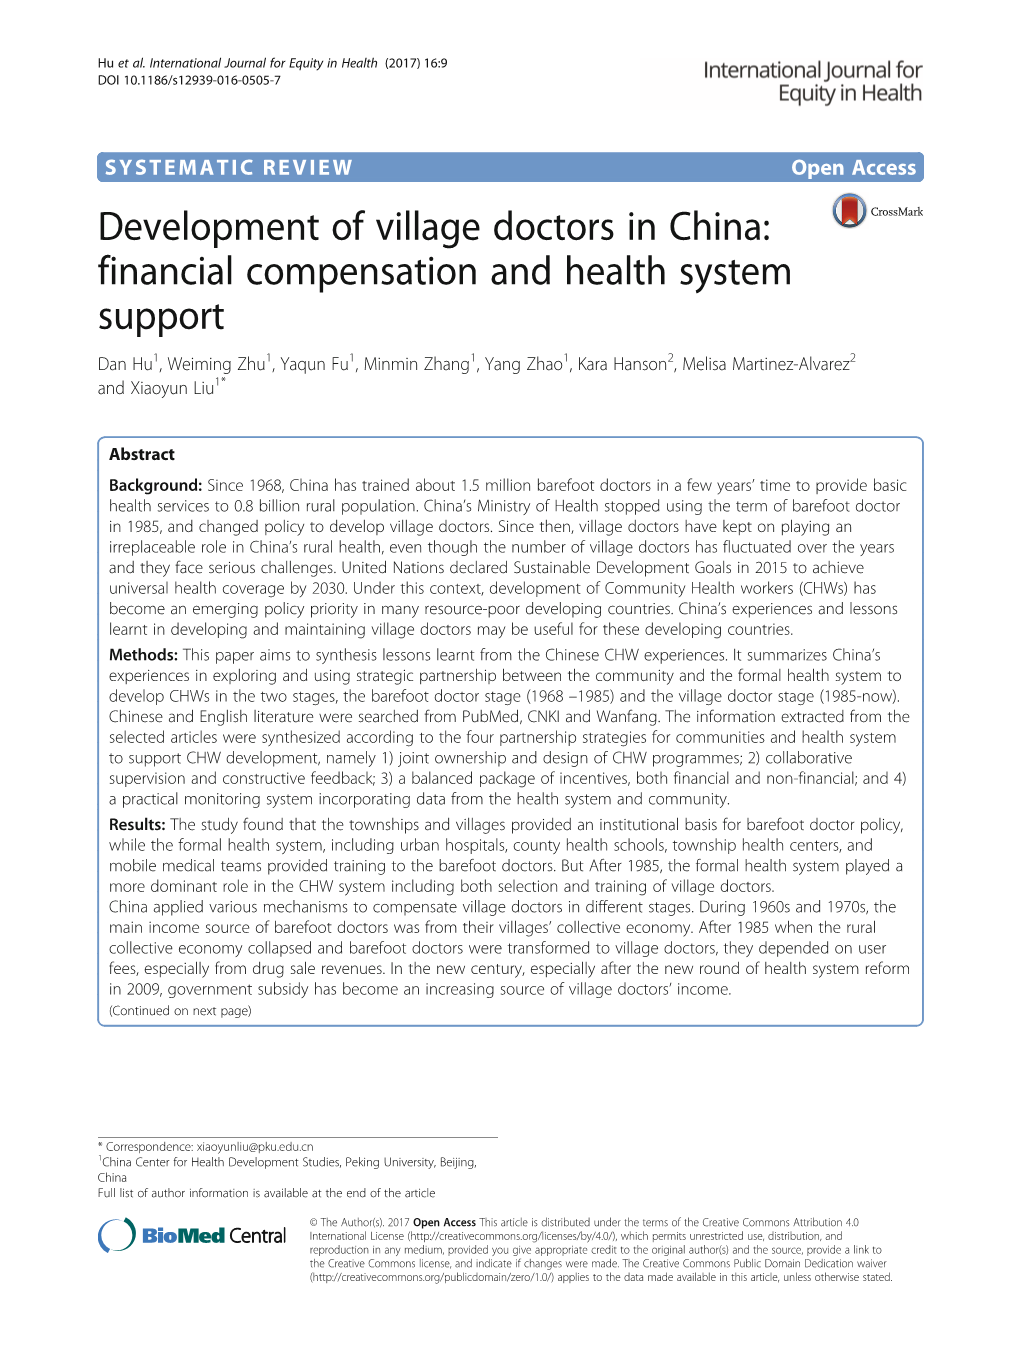 Development of Village Doctors in China